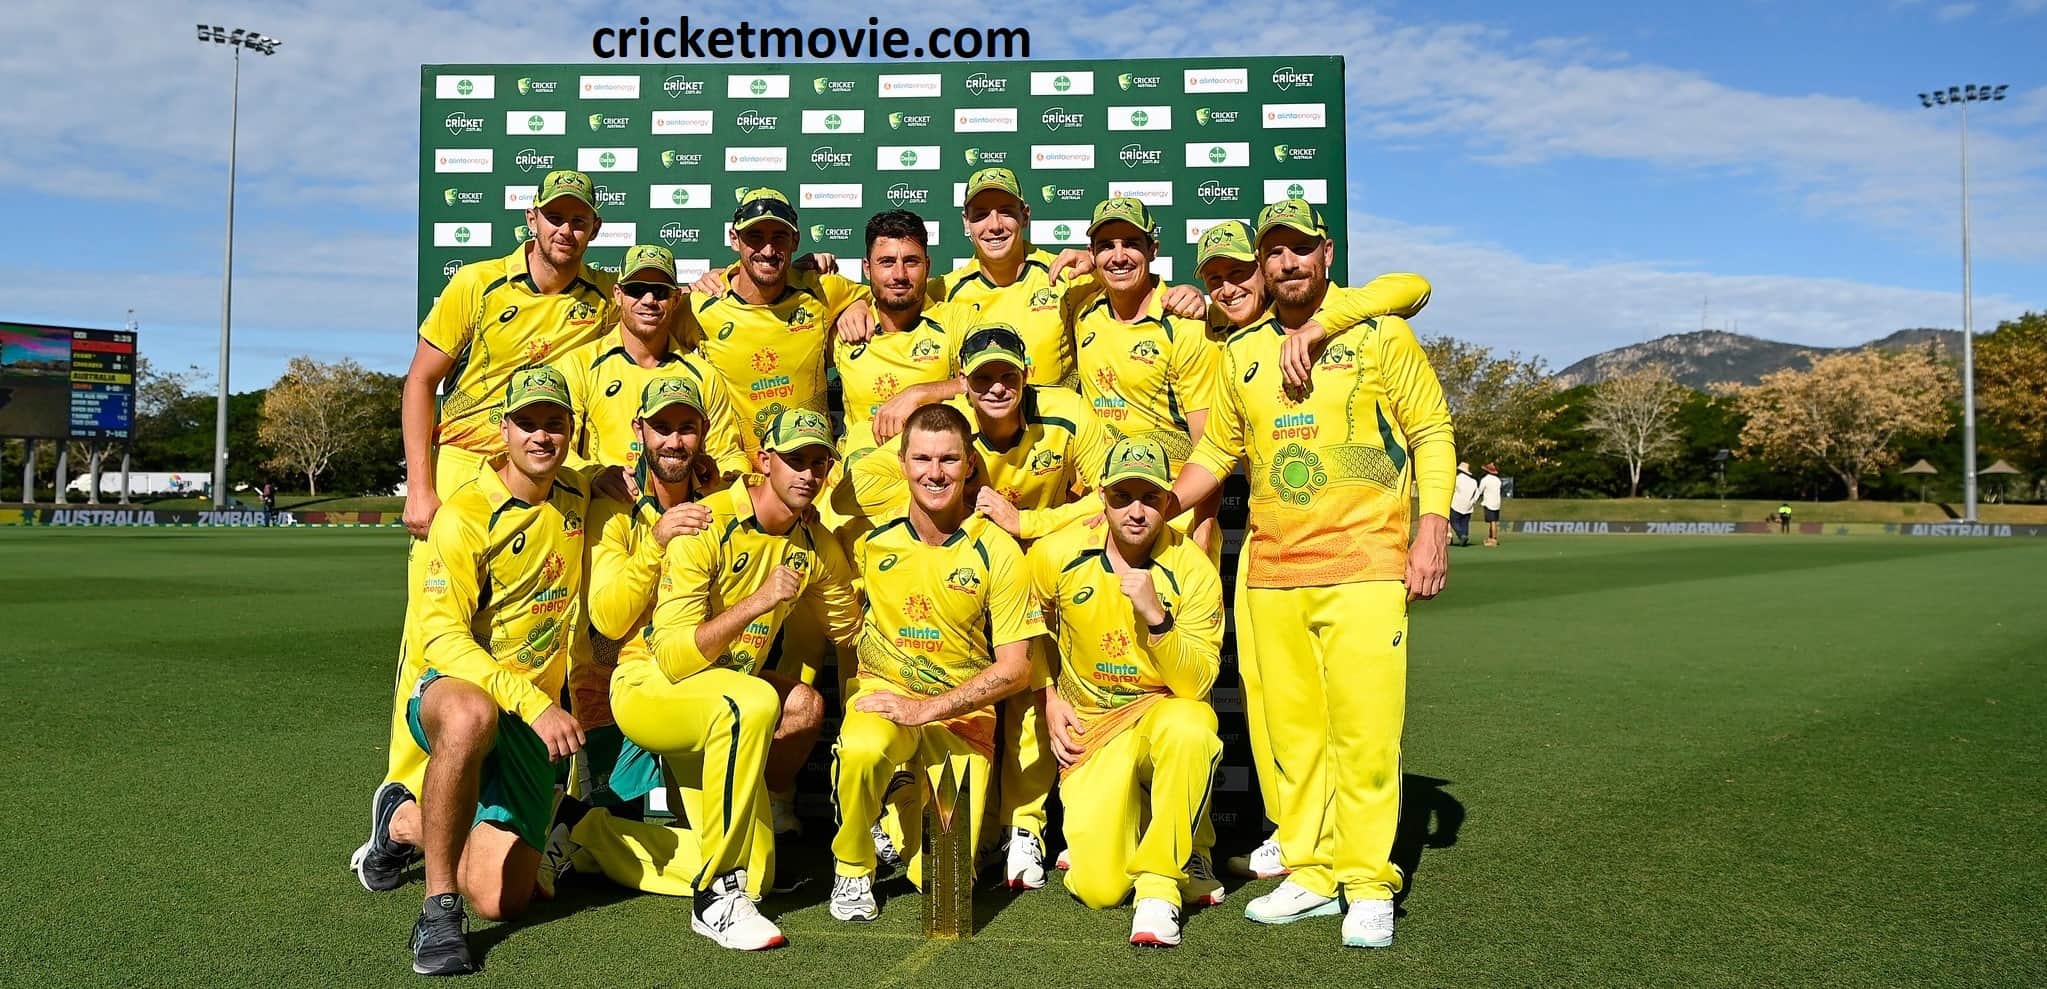 Zimbabwe beat Australia for the first time-cricketmovie.com